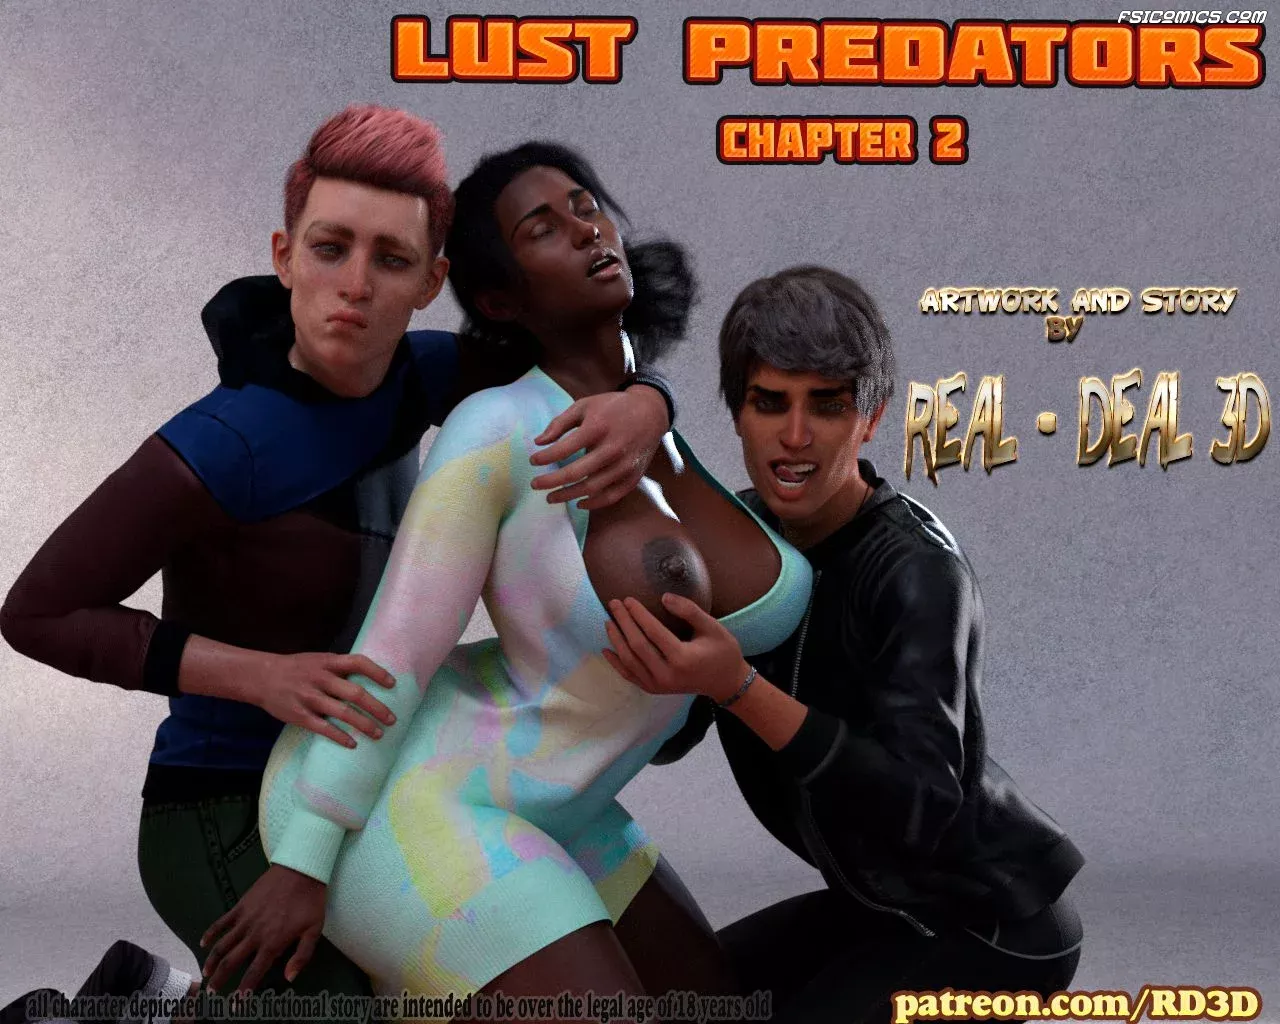 Lust Predators Chapter 2 - Real Deal 3D - 35 - FSIComics